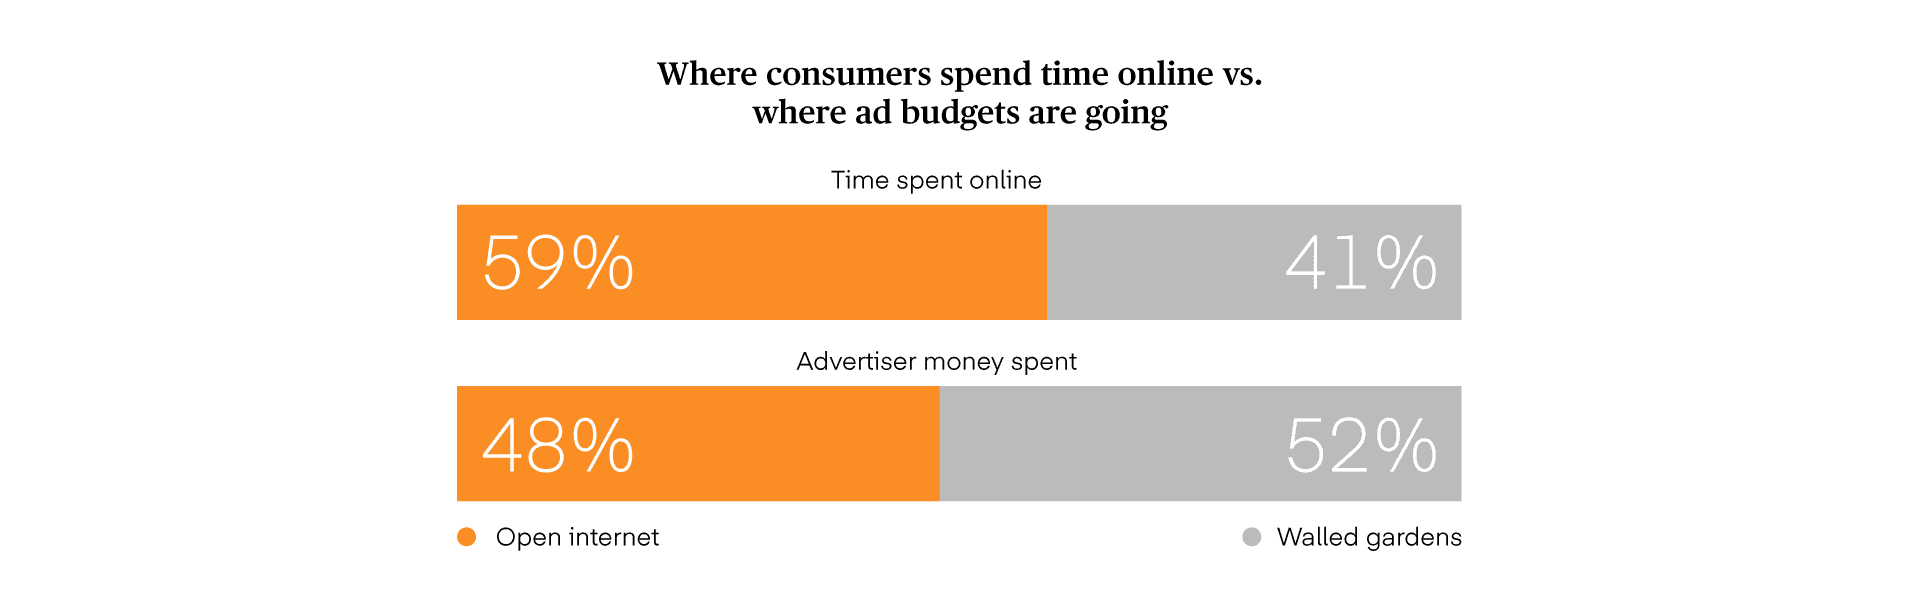 Statistic bar graph showing time spent online against advertiser money spent